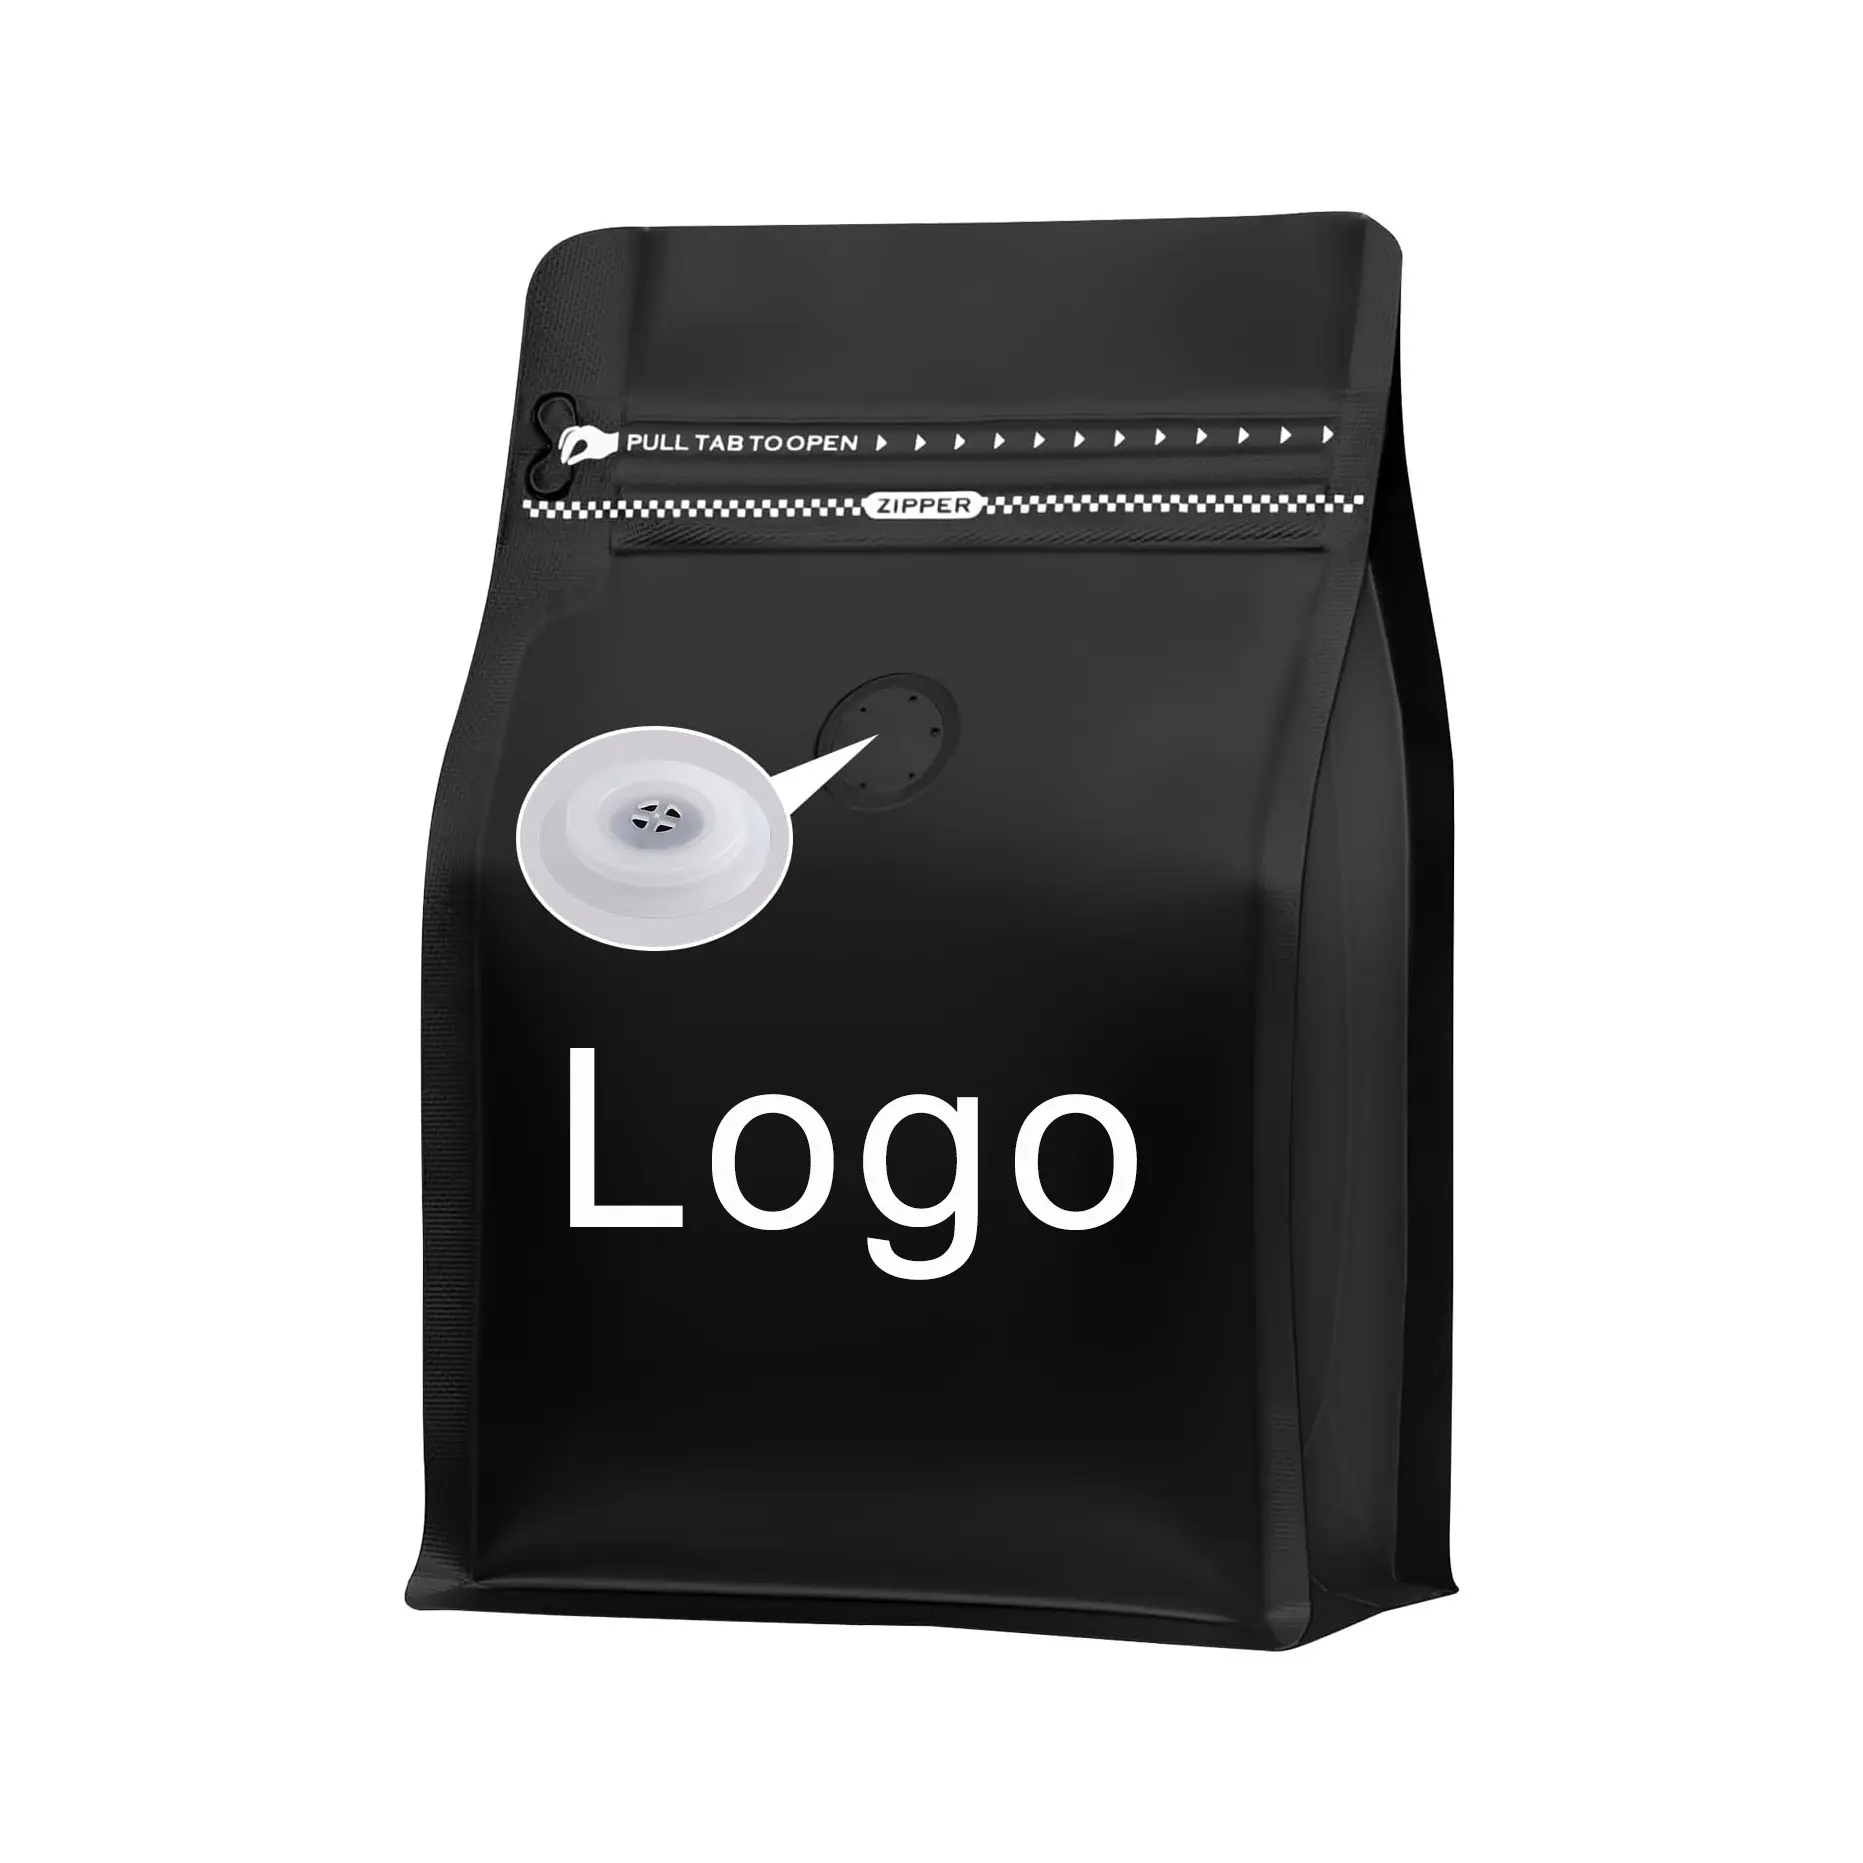 2023 नया कस्टम मुद्रित मैट फ्लैट तल बैग उच्च बाधा खाली बीन पैकेजिंग वाल्व के साथ काले कॉफी बैग